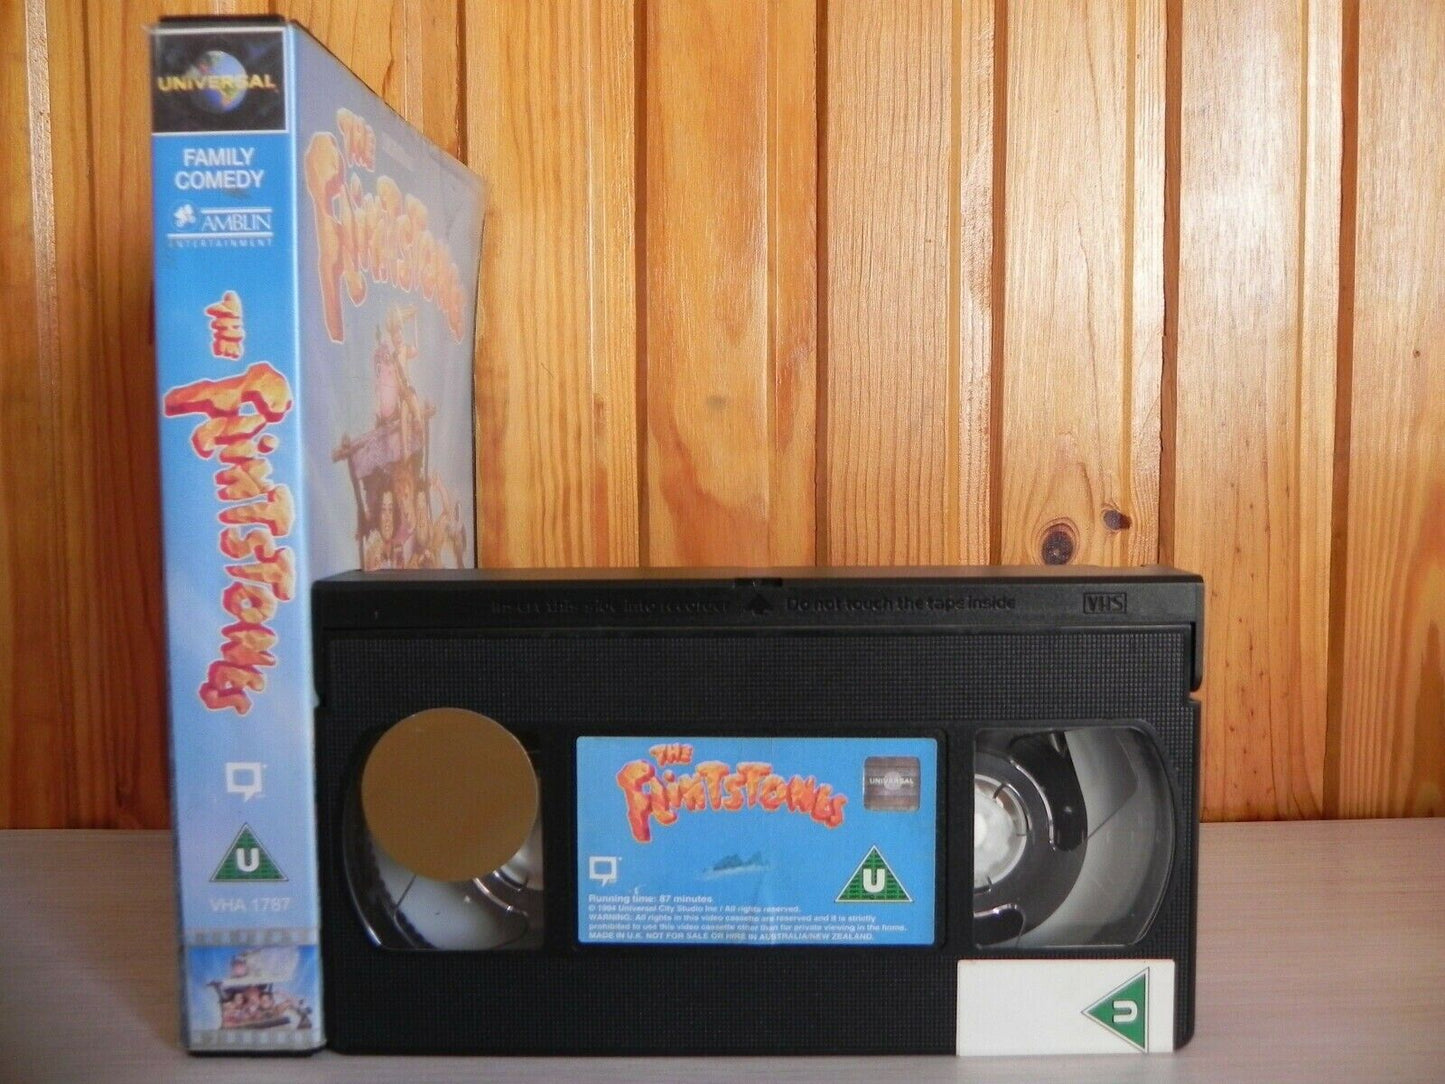 The Flintstones - Big Box - Universal - Family Video - Comedy - Halle Berry VHS-